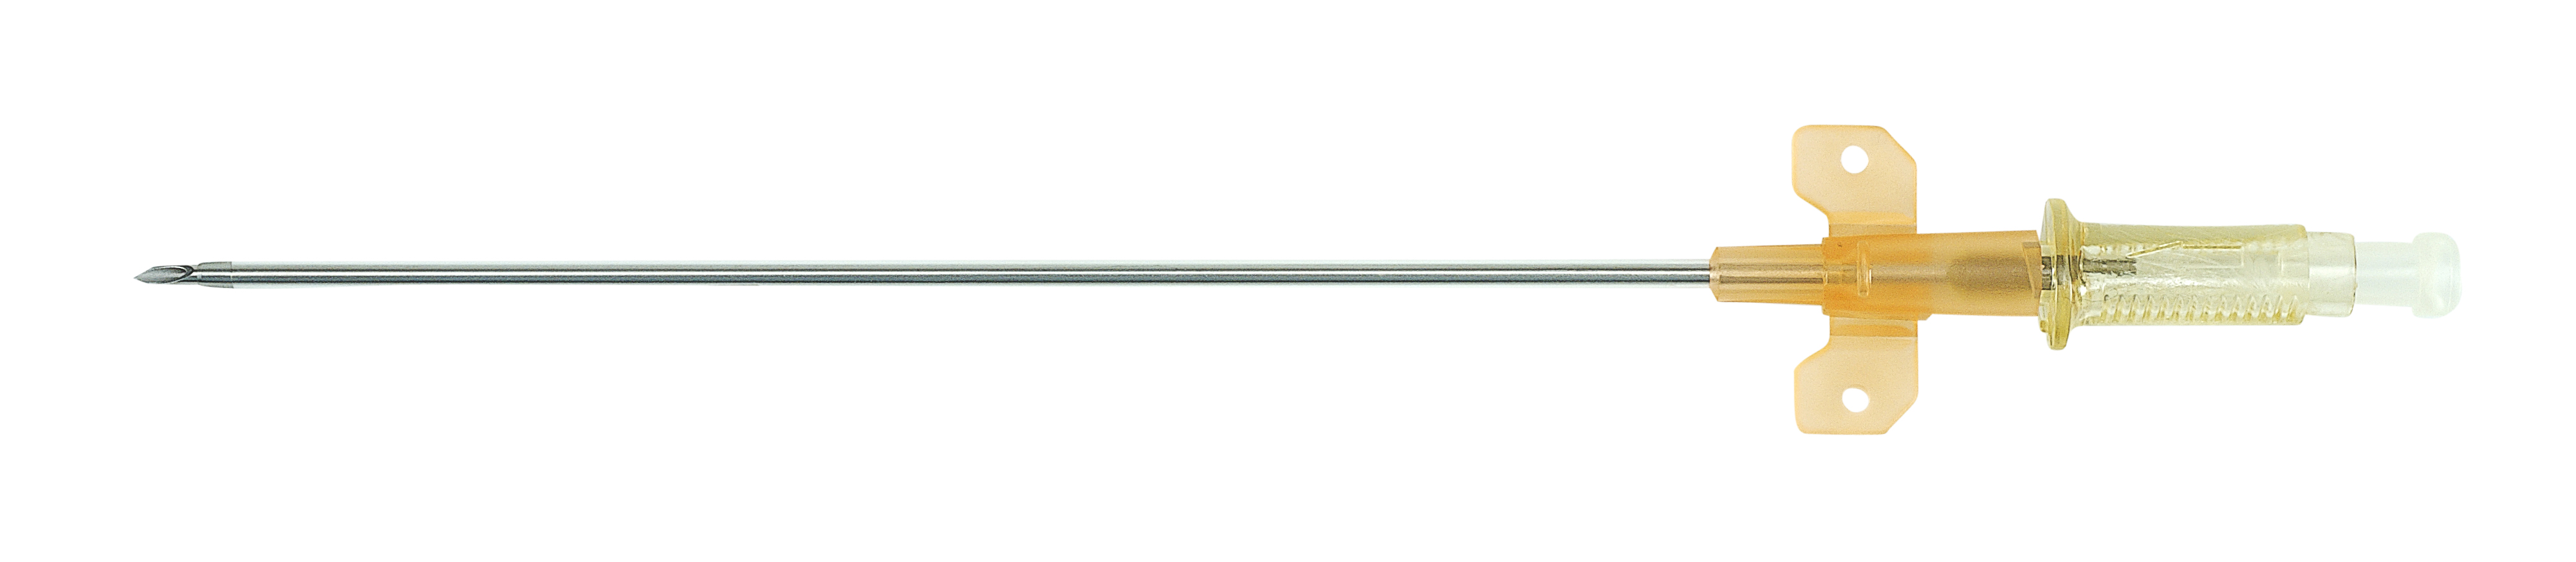 Intranüle needle 112.20, 14G, 2.1 x 105 mm, 50/pk